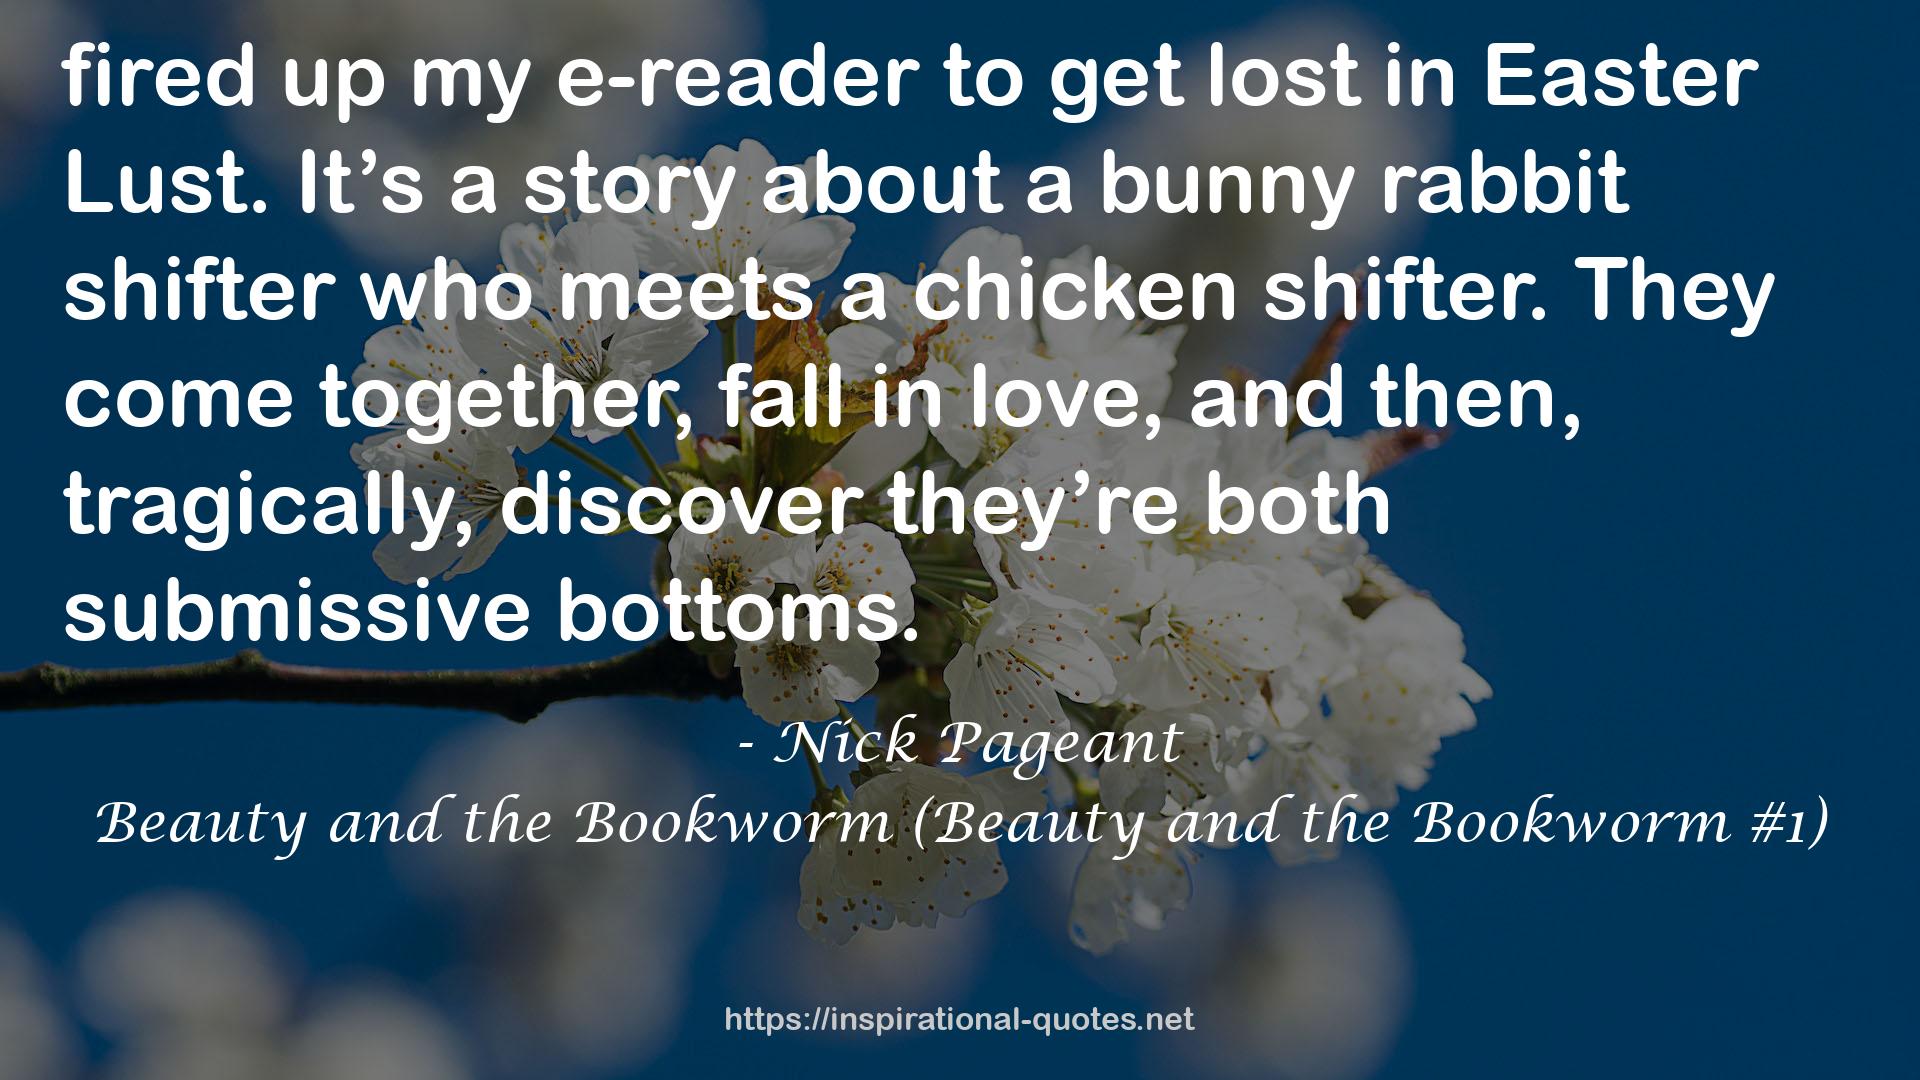 Beauty and the Bookworm (Beauty and the Bookworm #1) QUOTES